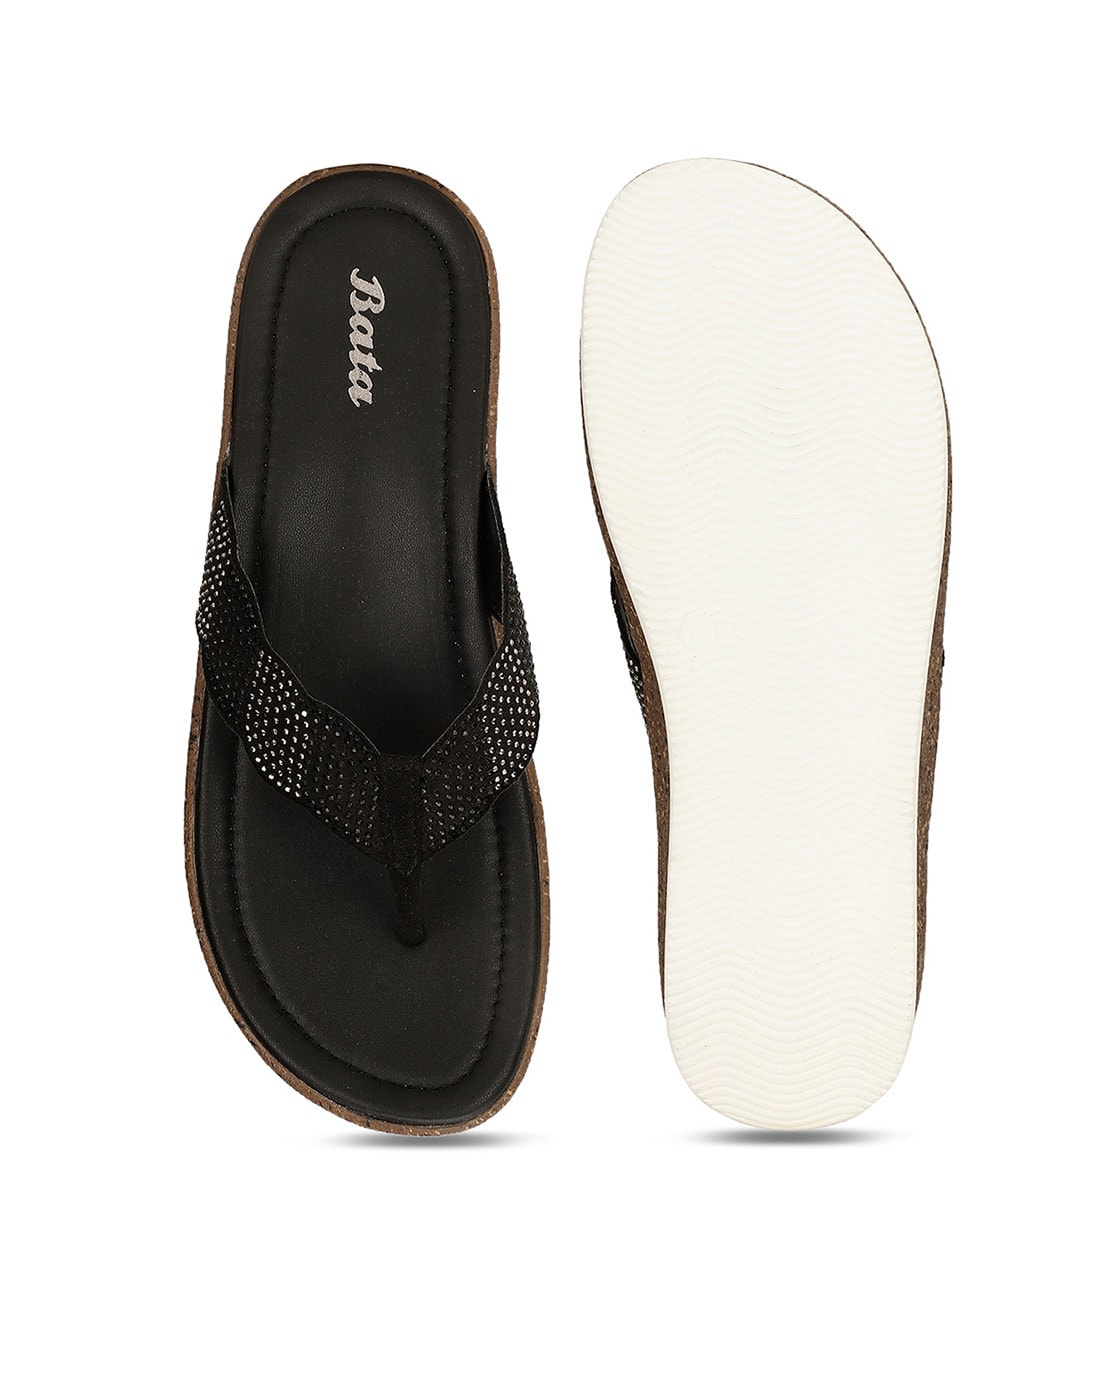 Buy Bata New Palm Women Sandals Online